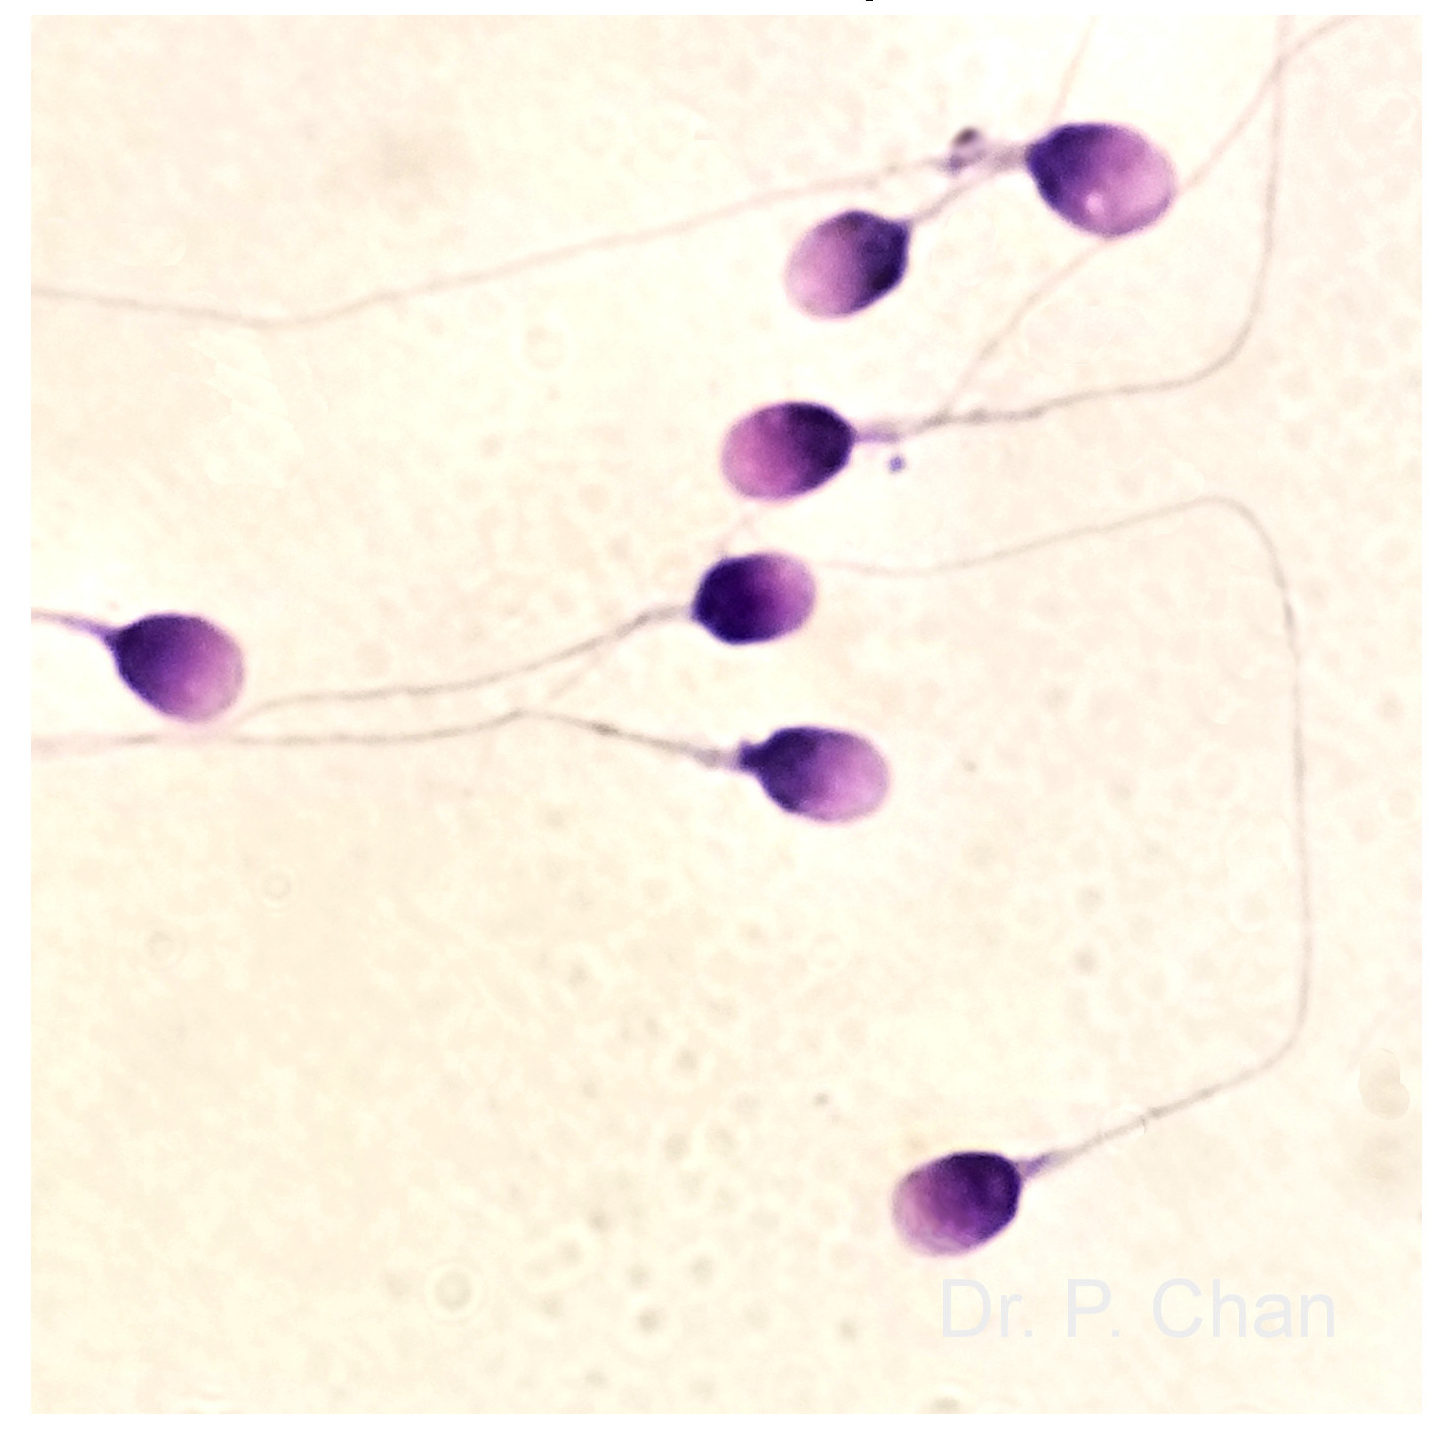 сперма во влагалище у детей фото 11